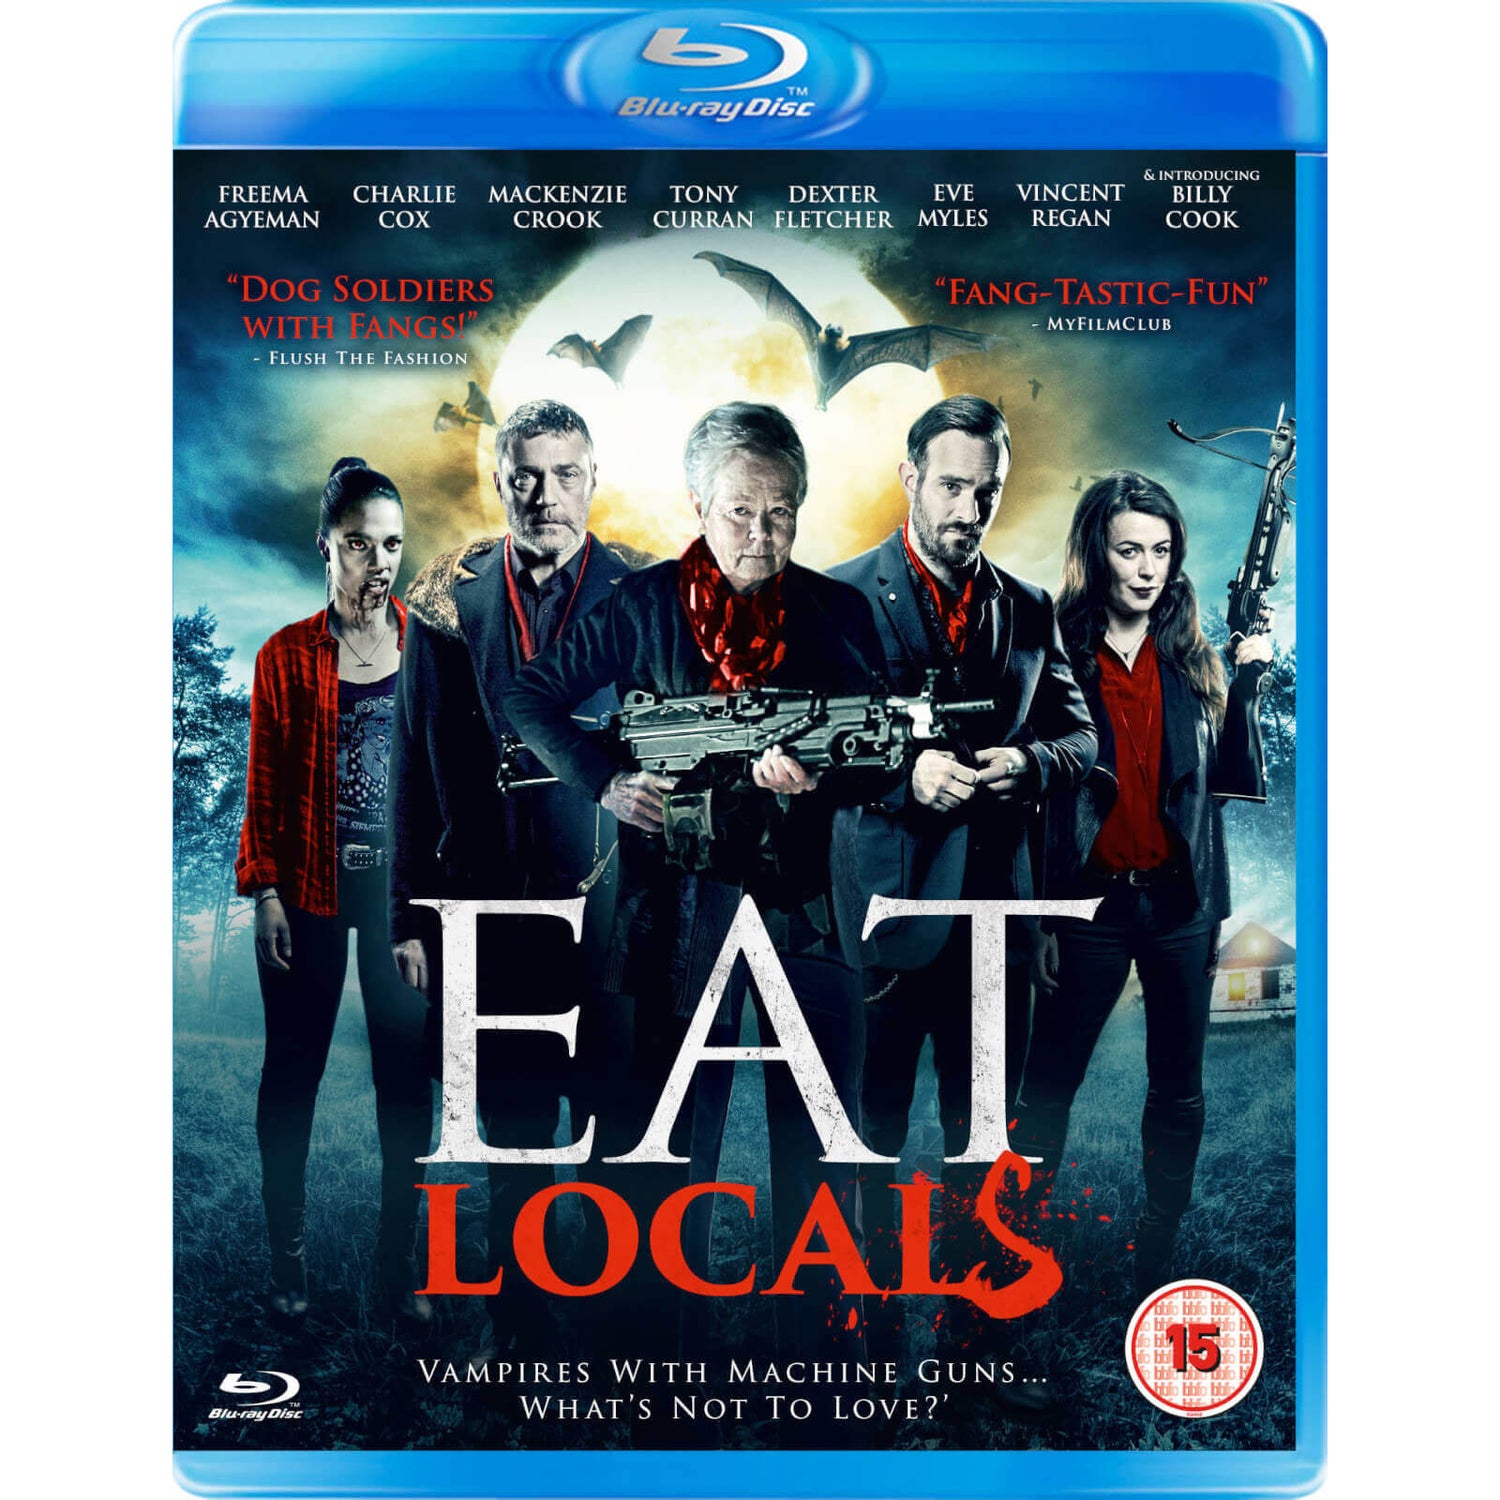 Eat Locals Blu-ray